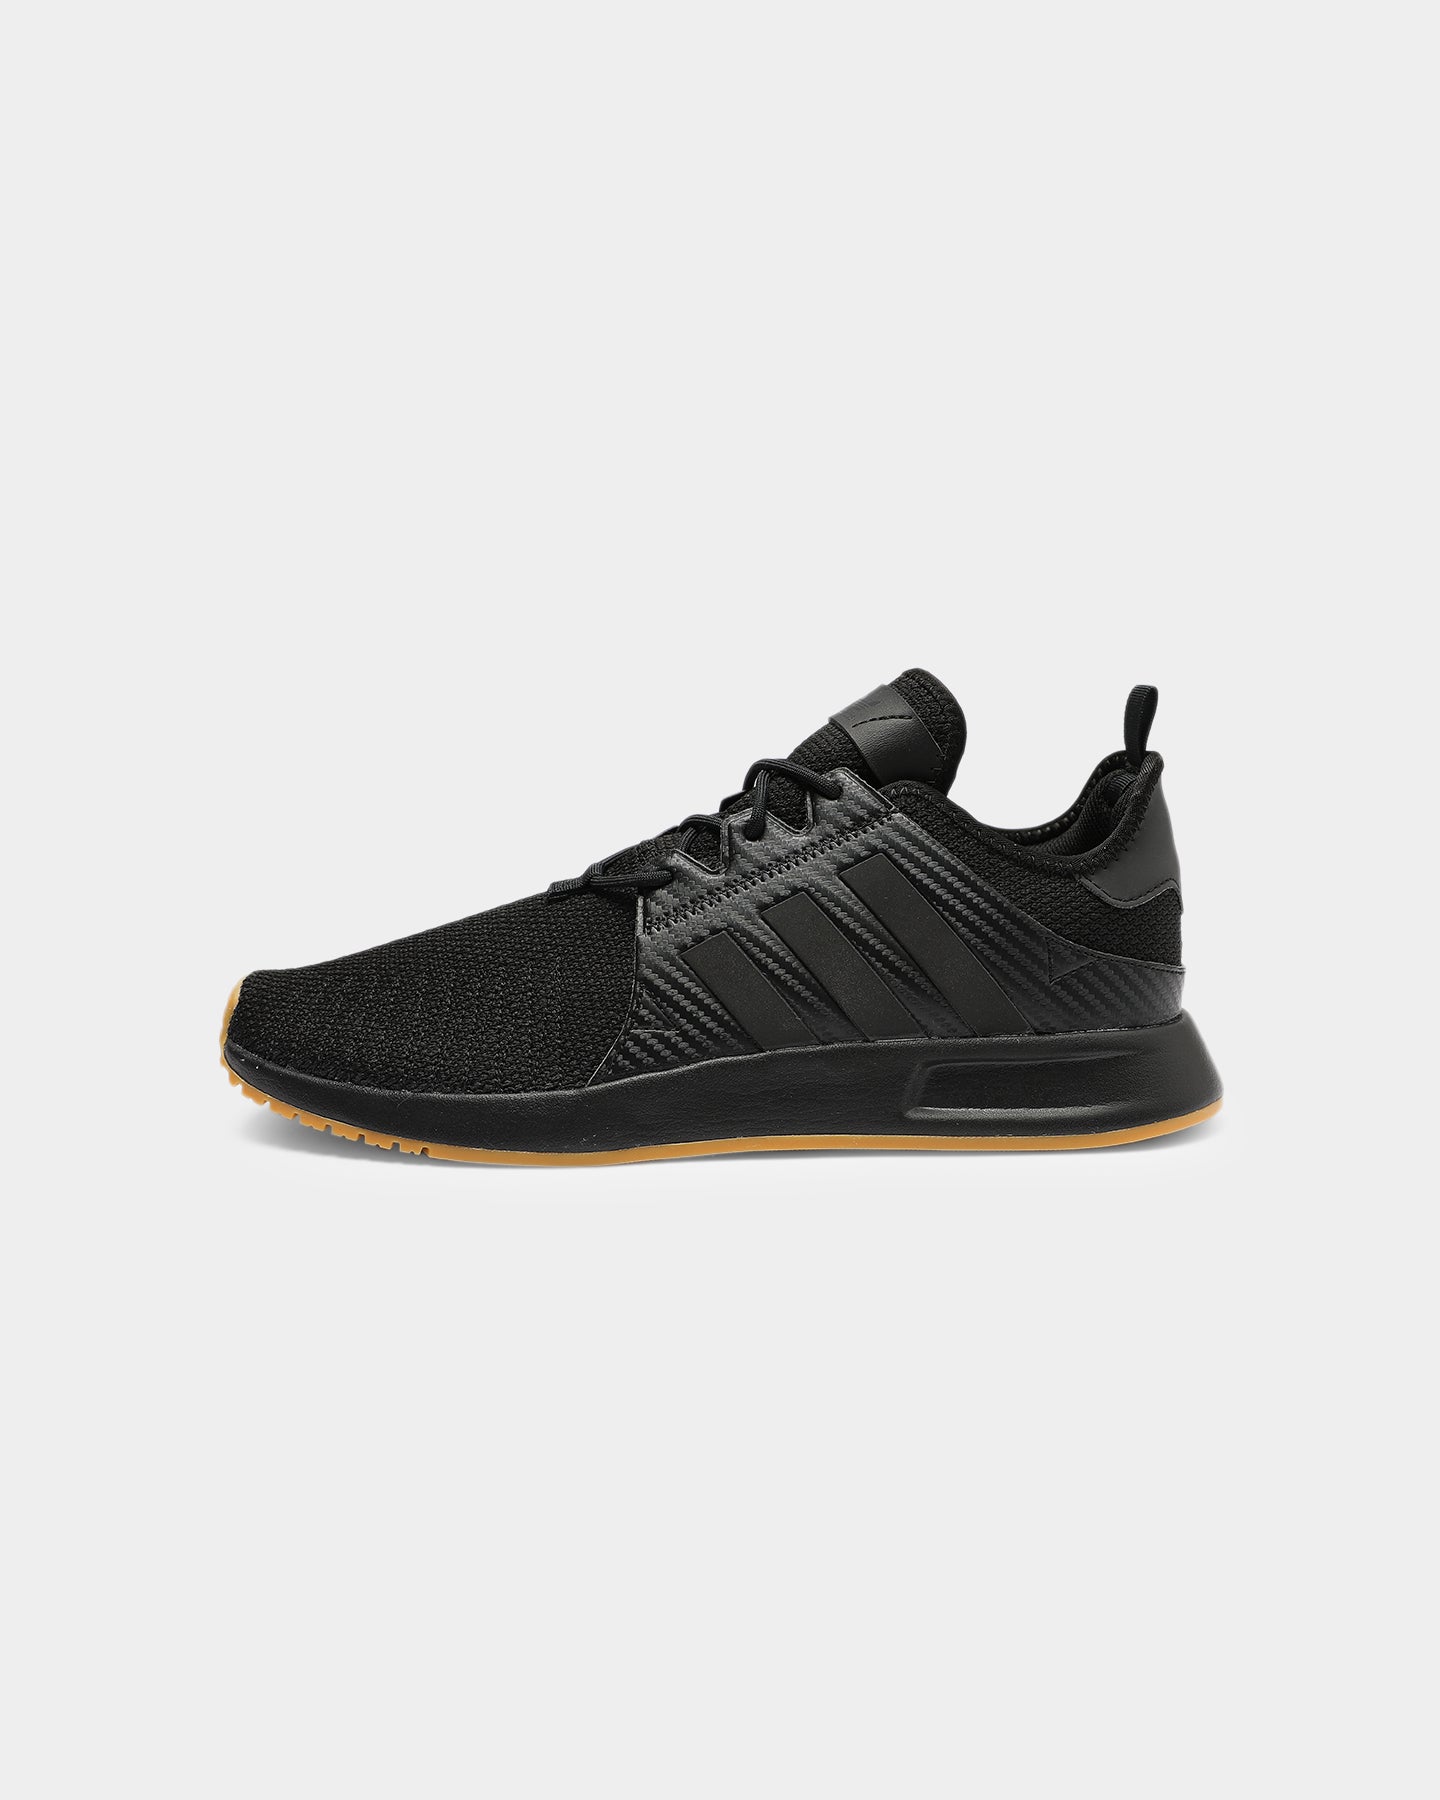 adidas x_plr knit black & gum shoes